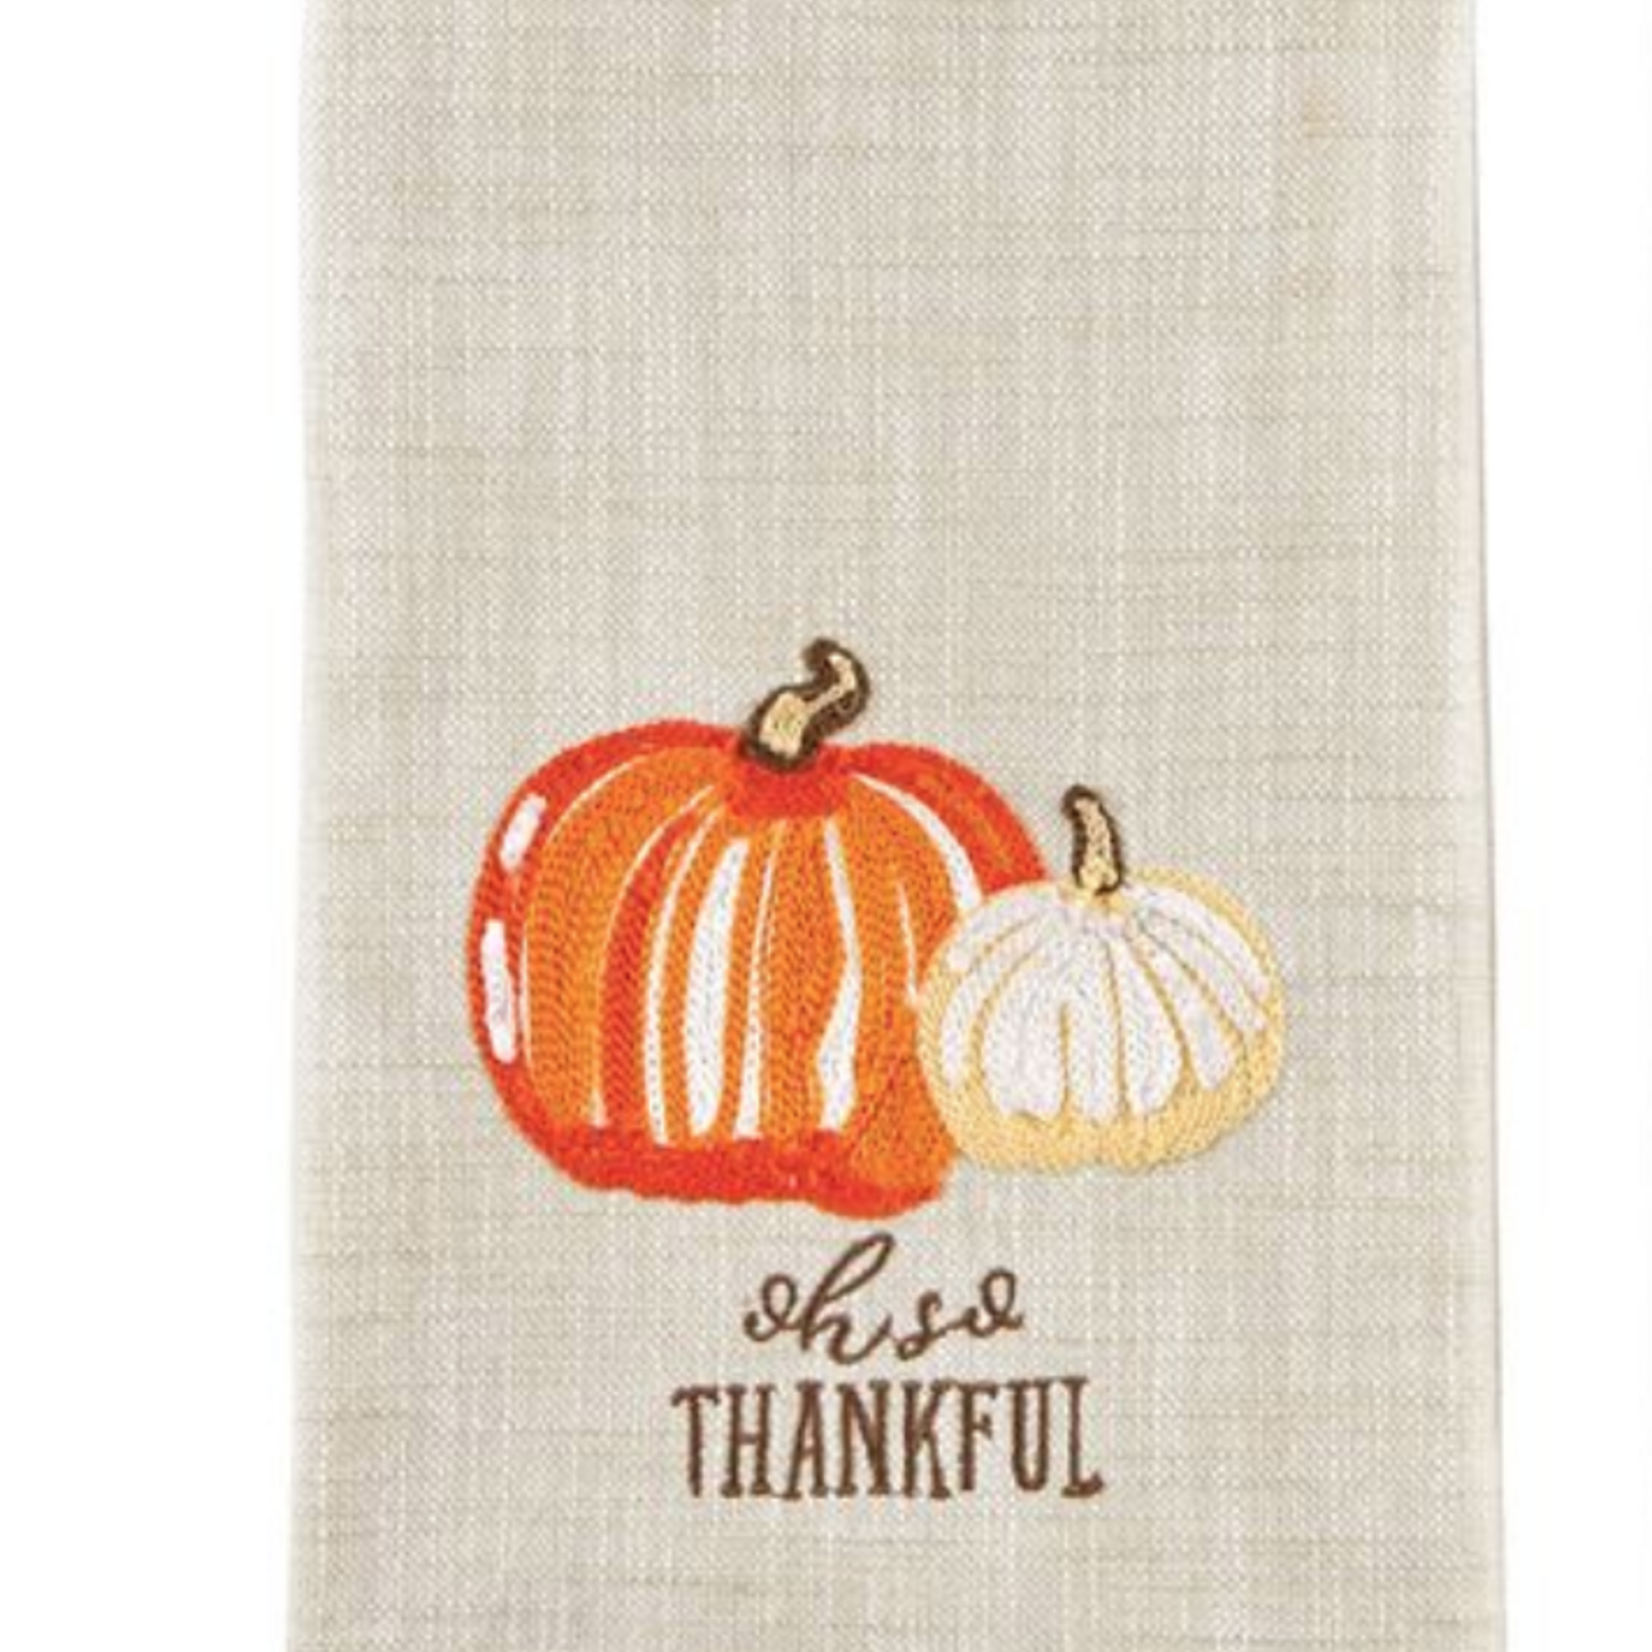 https://cdn.shoplightspeed.com/shops/621427/files/24807215/1652x1652x1/mud-pie-mud-pie-embroidered-pumpkin-towel-thankful.jpg